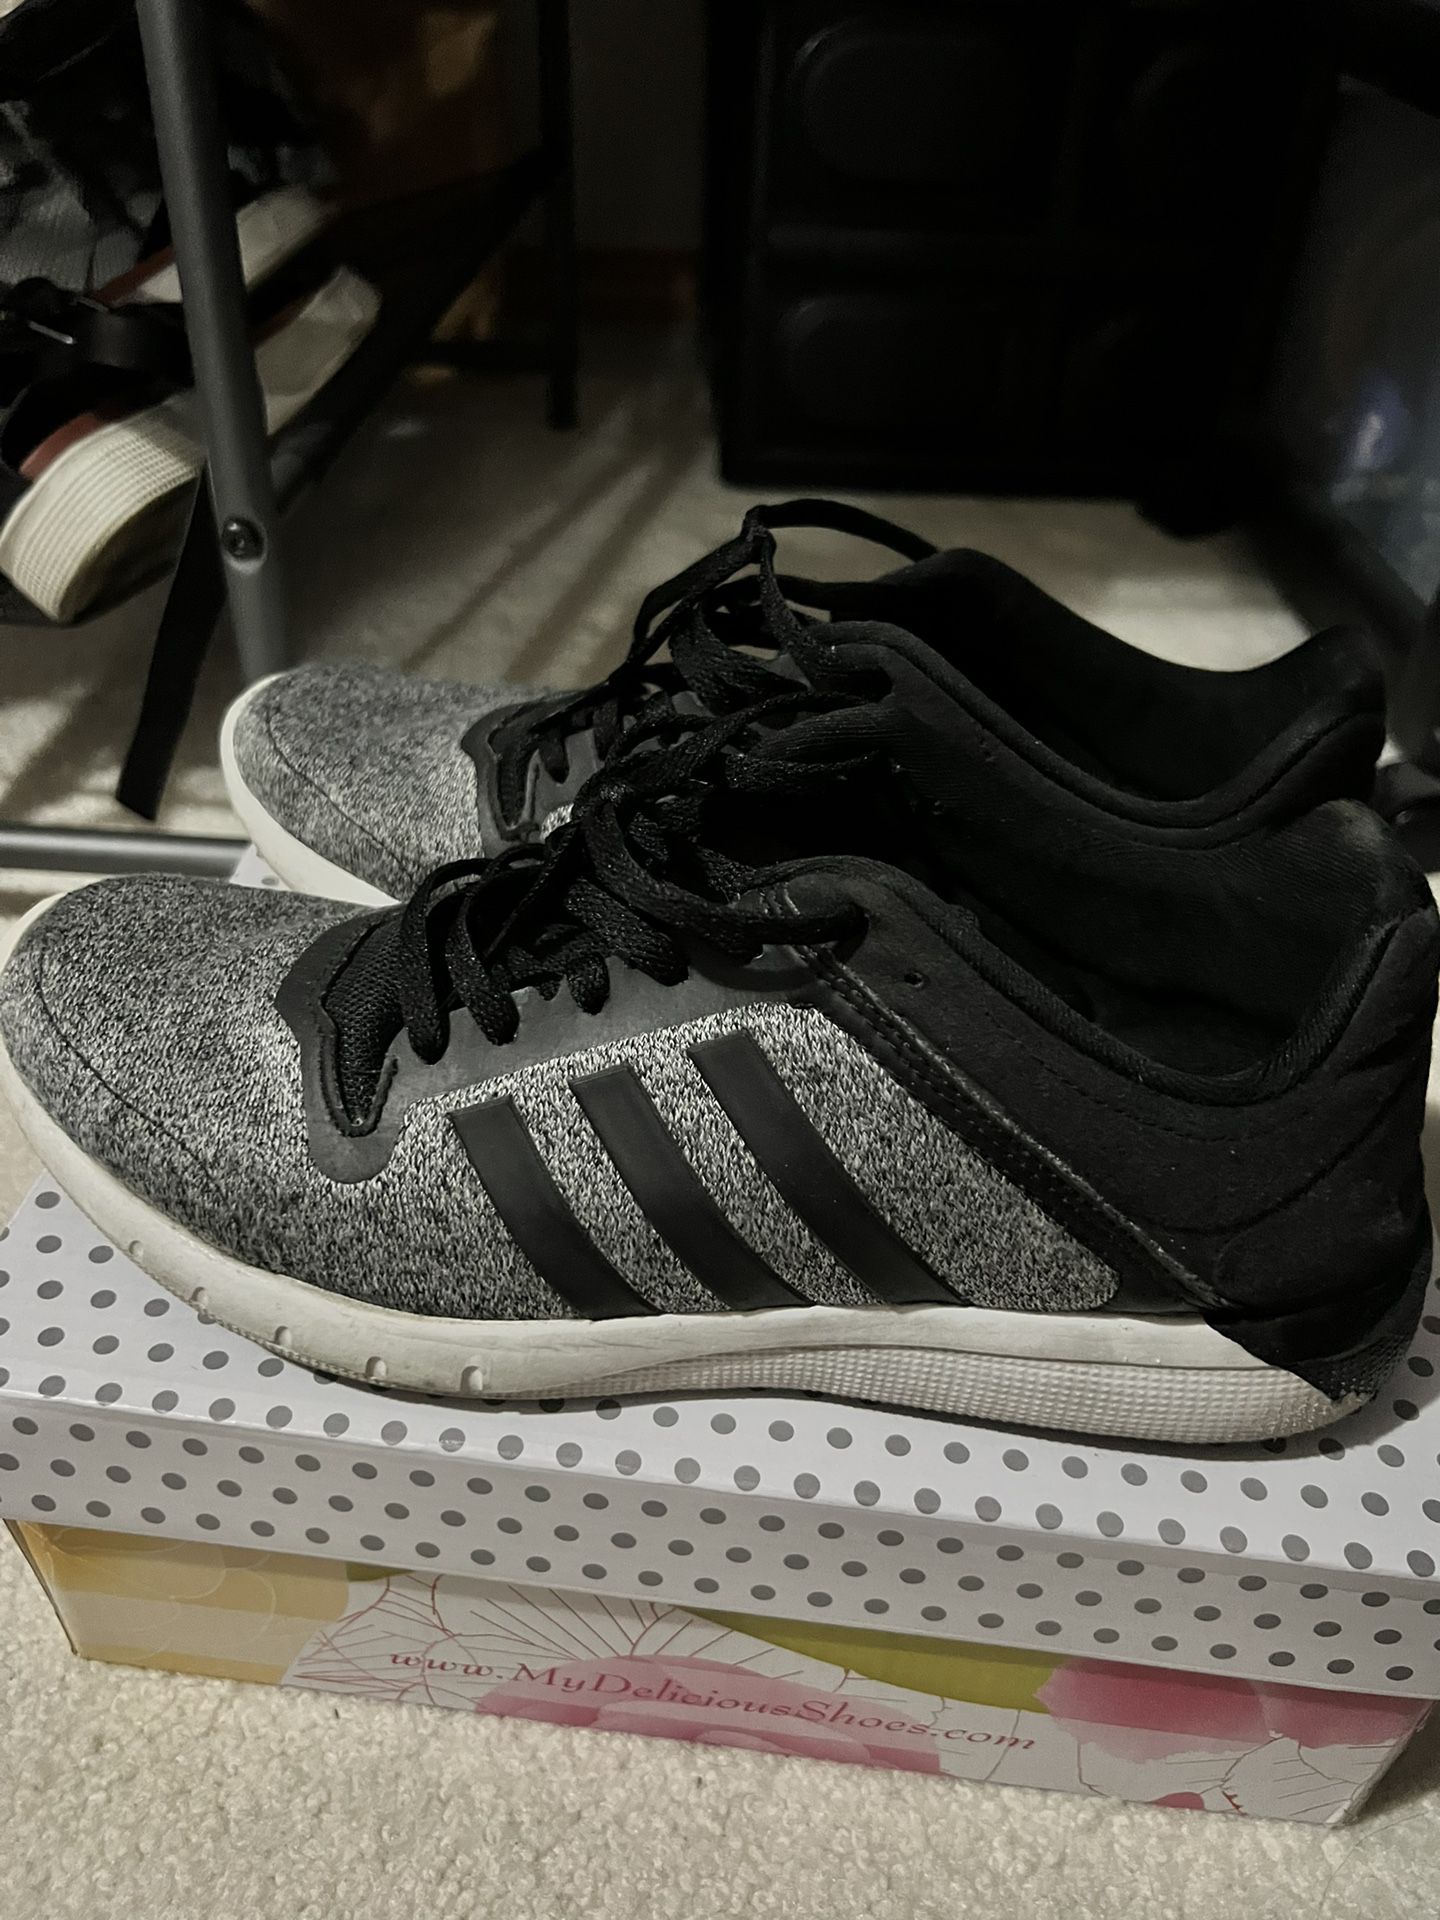 Adidas Grey Women’s Shoes Size 8